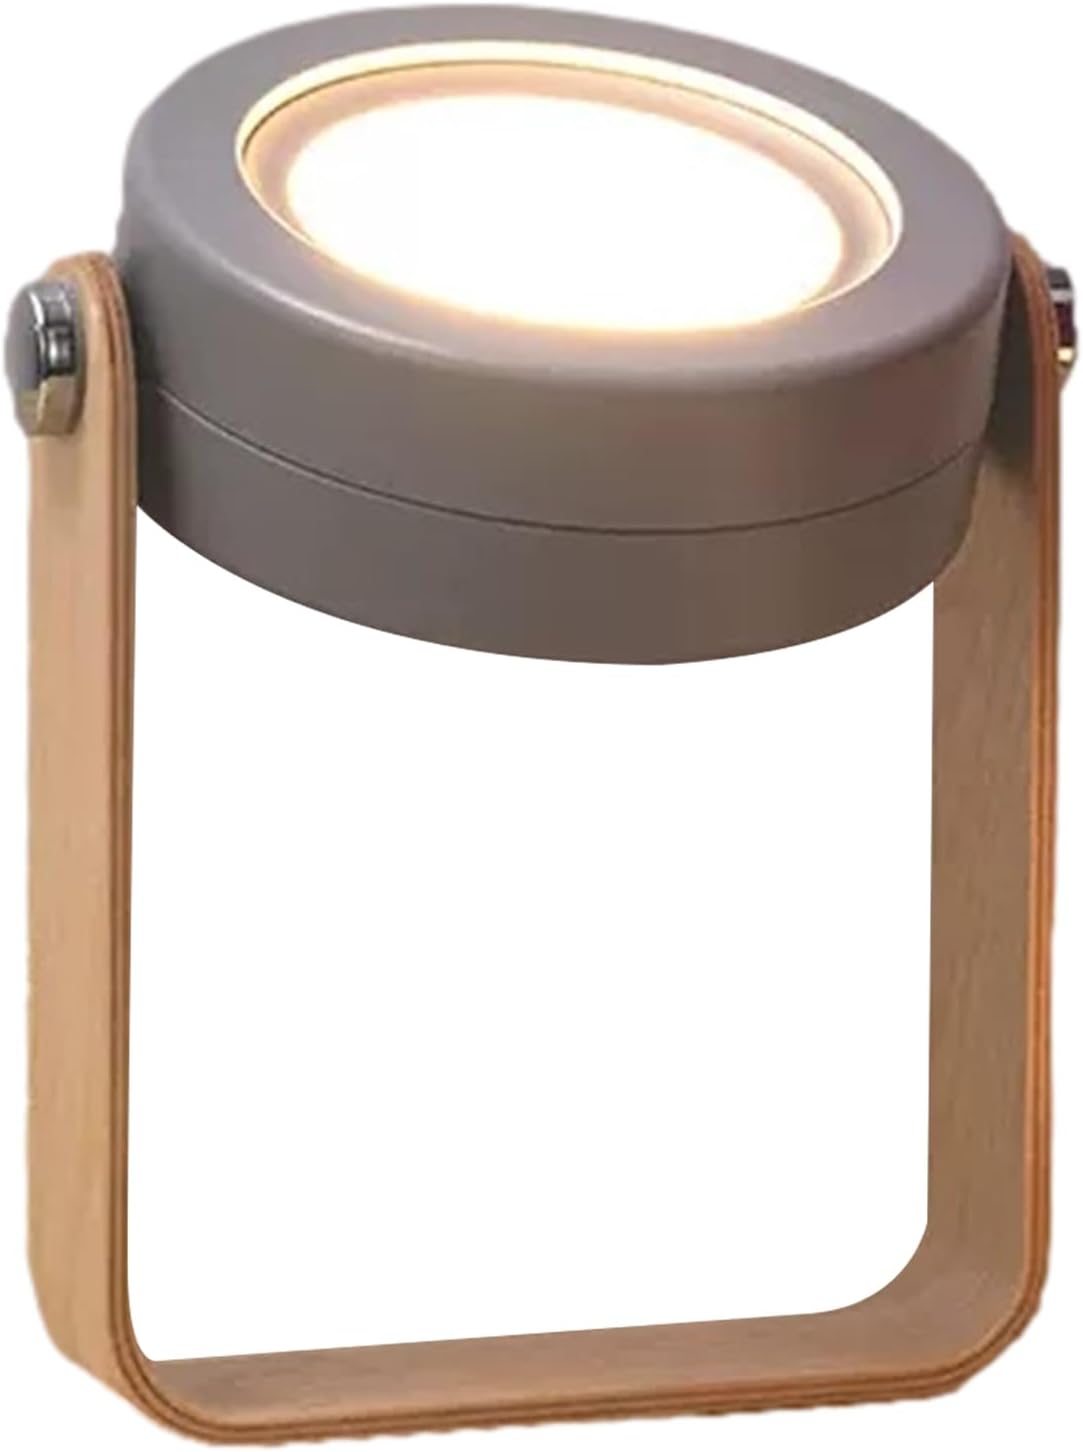 TouchWood Lamp: Lampara Led plegable